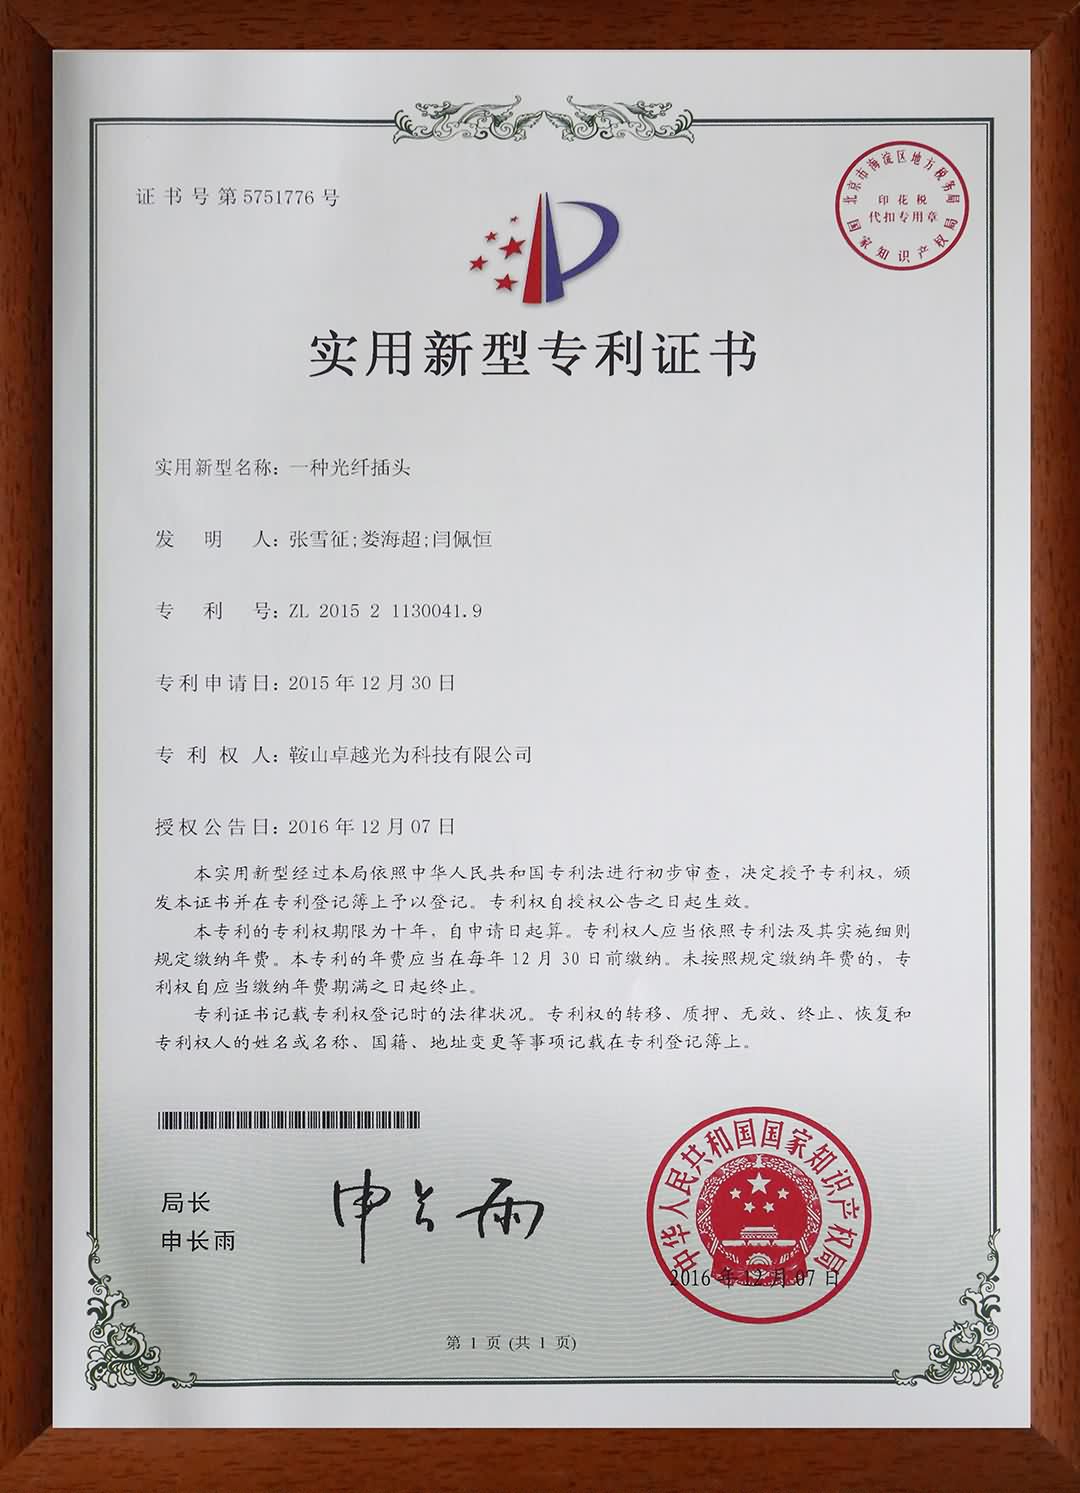 Paten certificate 4